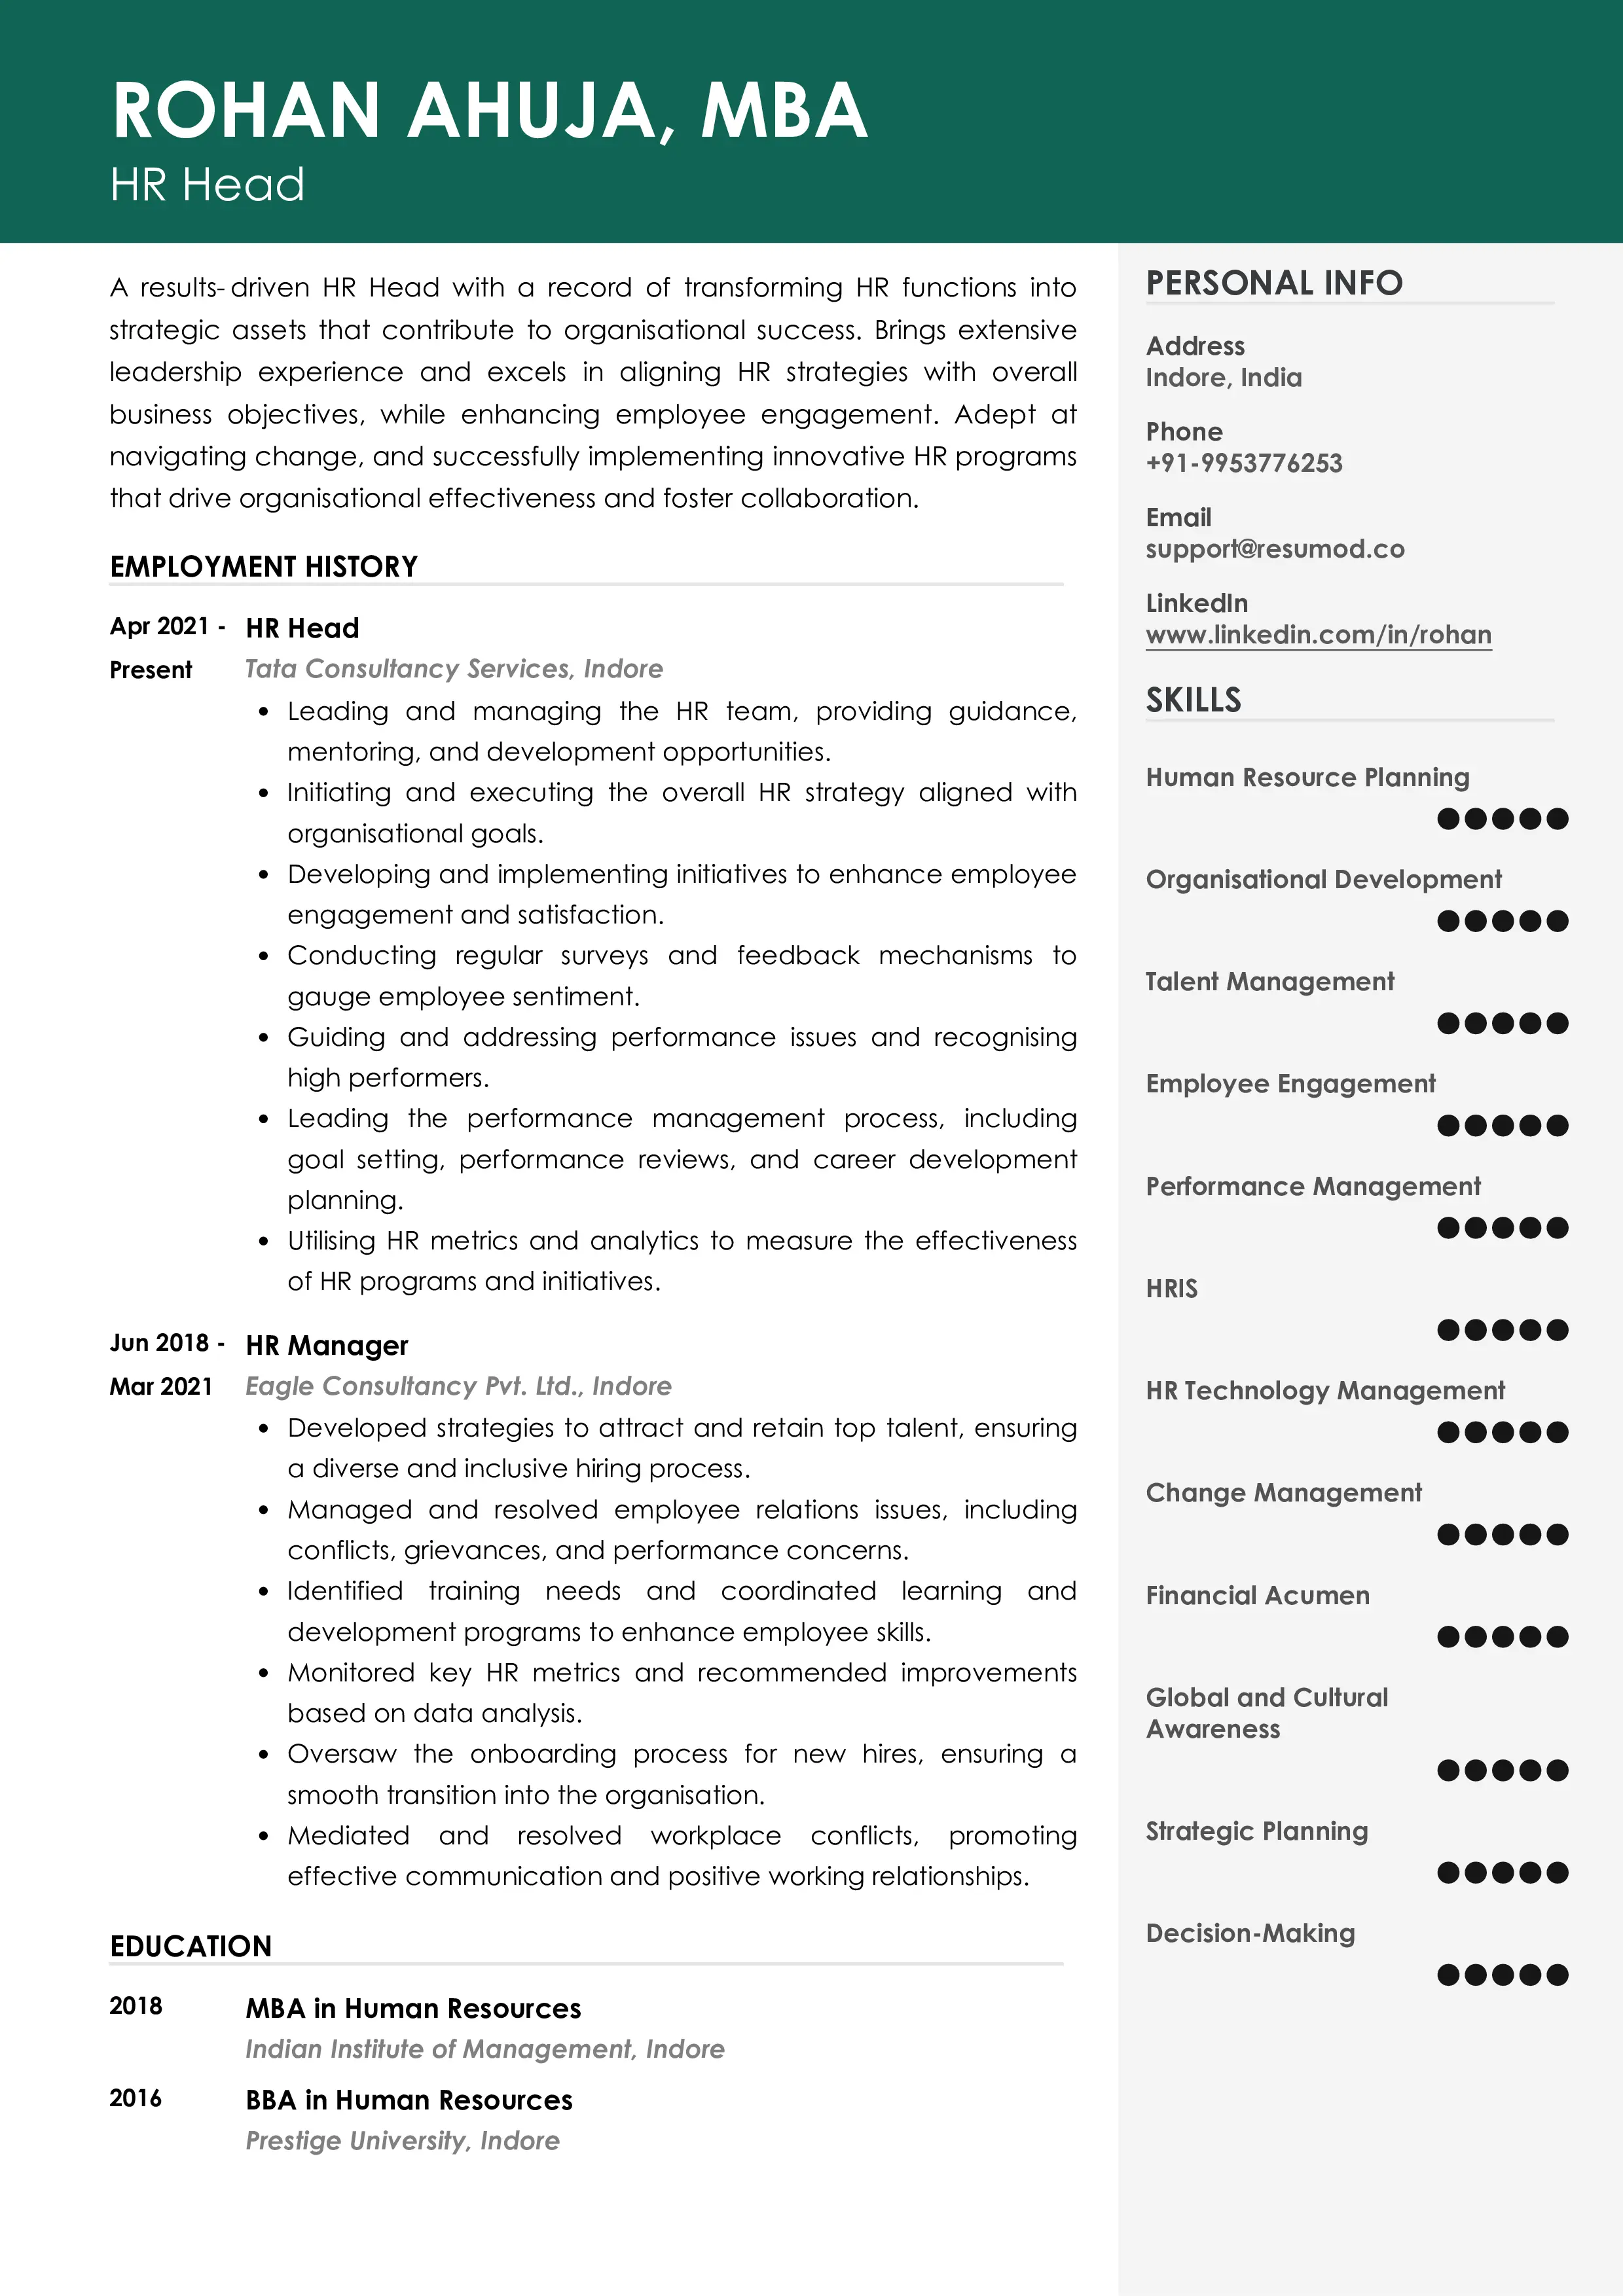 Sample Resume of HR Head | Free Resume Templates & Samples on Resumod.co